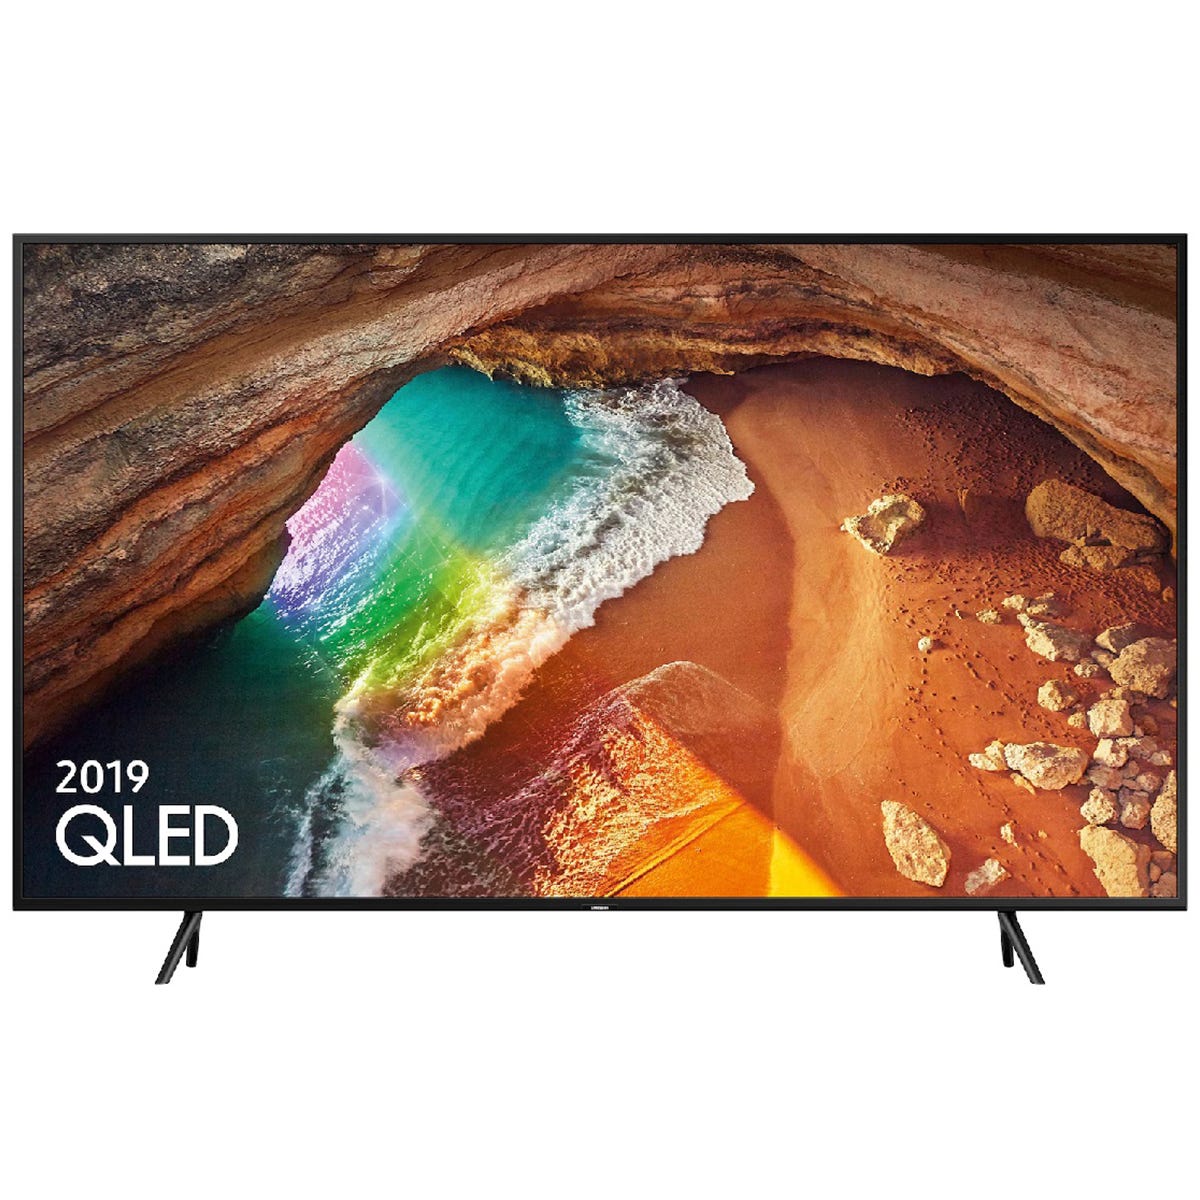 Samsung Q60R 43' QLED 4K Quantum HDR Smart TV